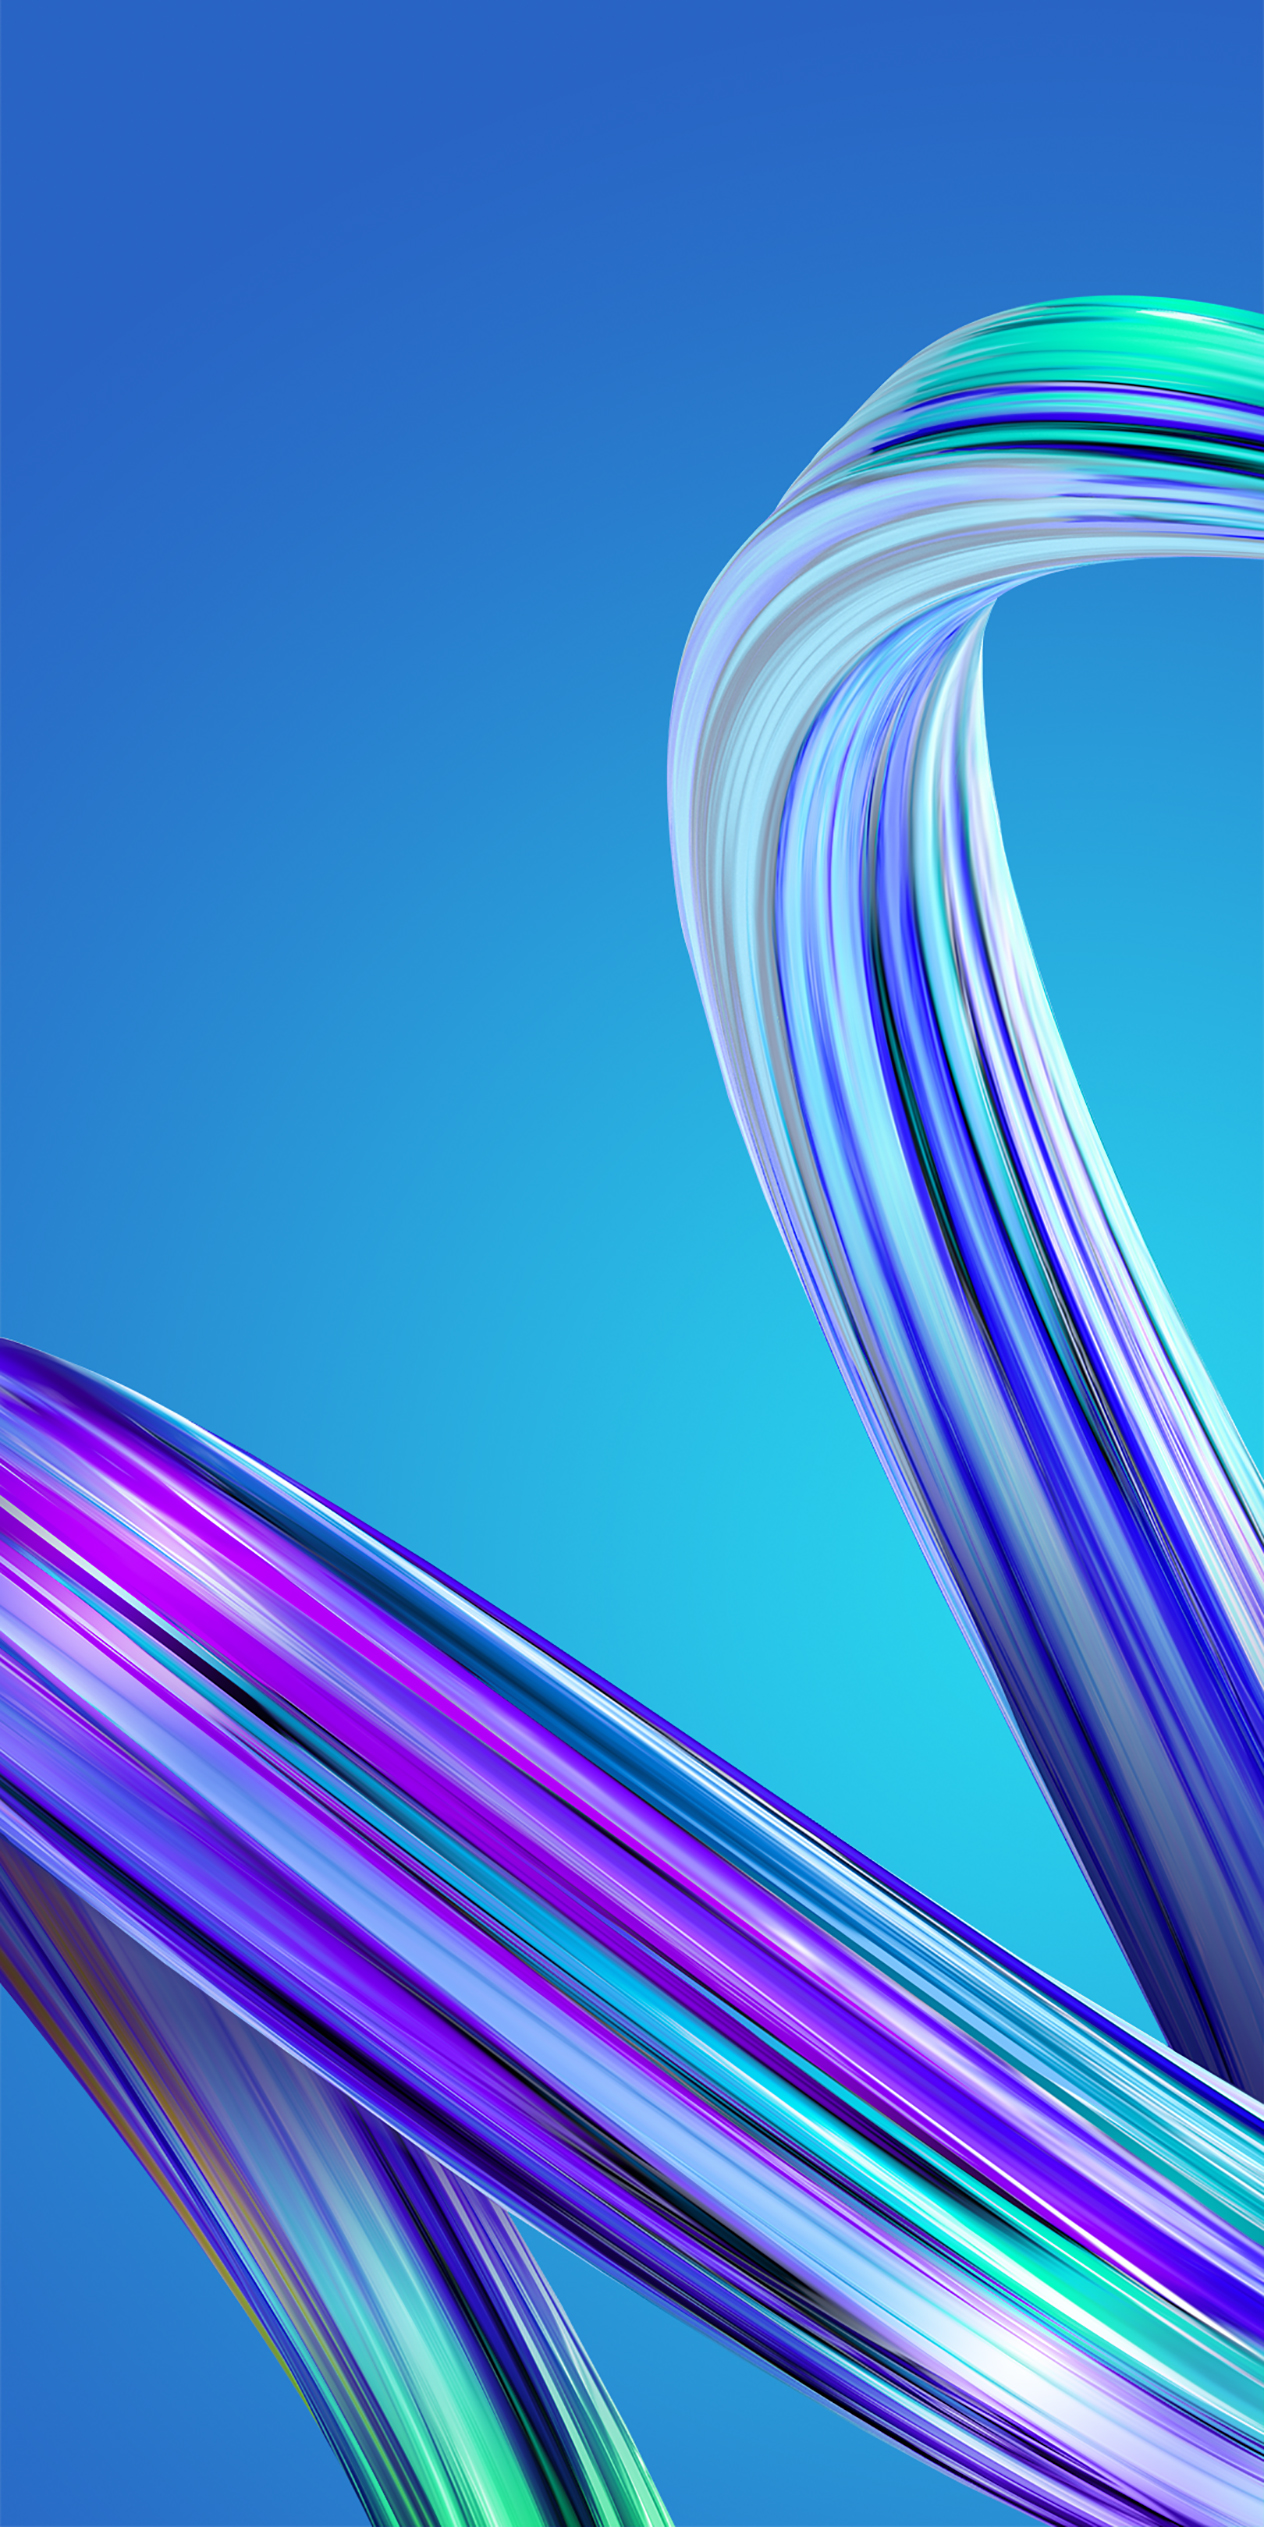 Download Asus Zenfone Max Pro M1 Stock Wallpapers | DroidViews